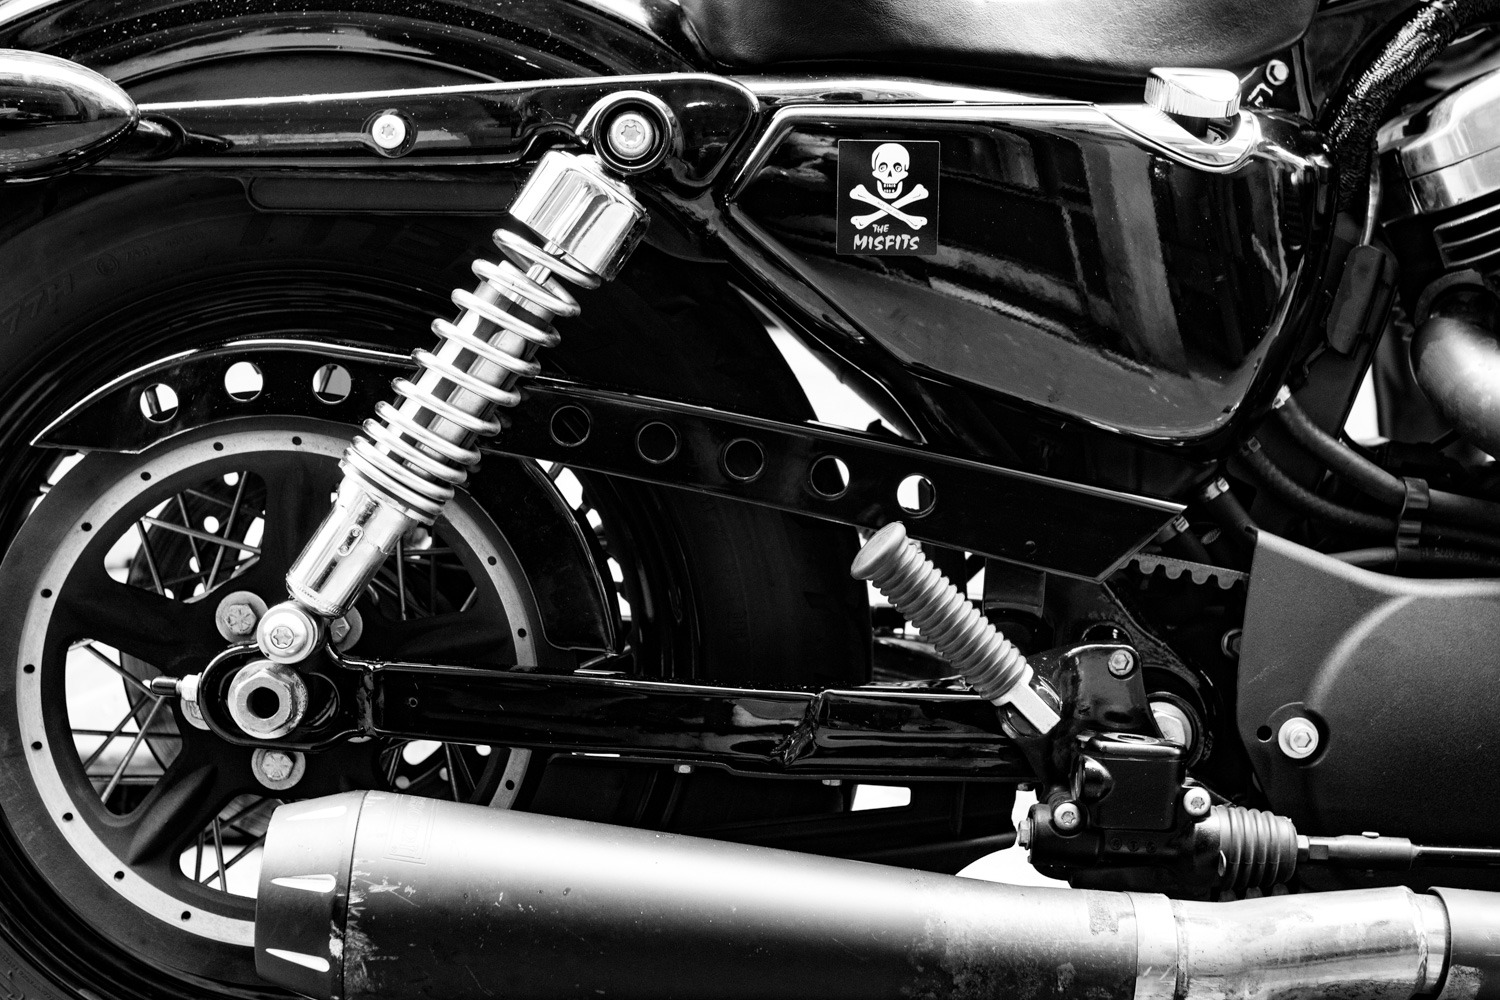 Harley Davidson forty-eight